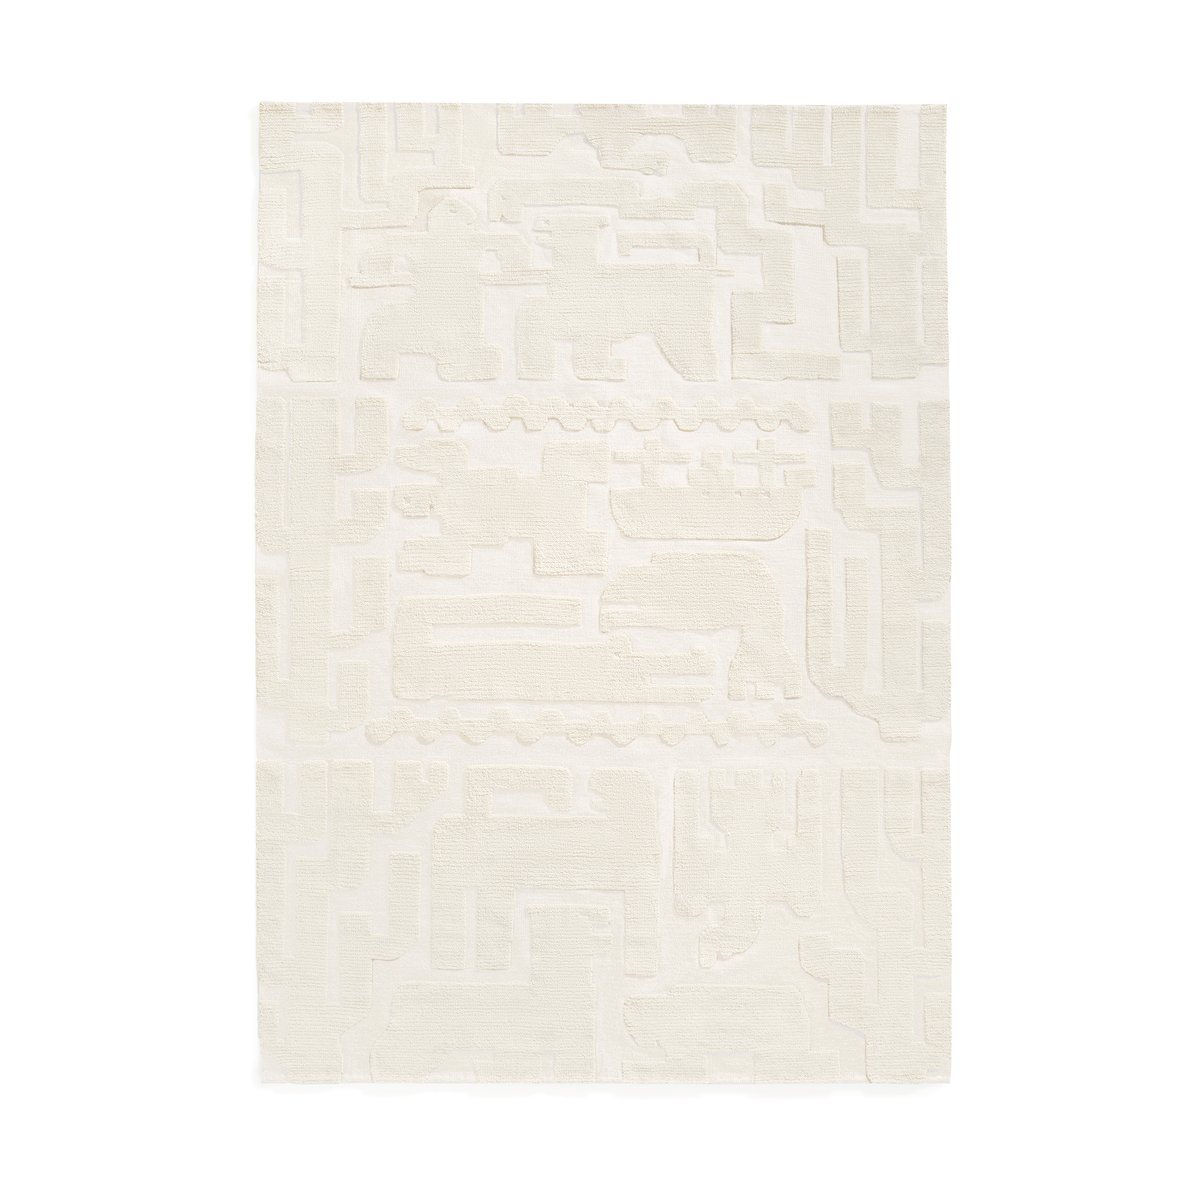 Layered Stig Lindberg Gunnel -villamatto Bone White 200×300 cm